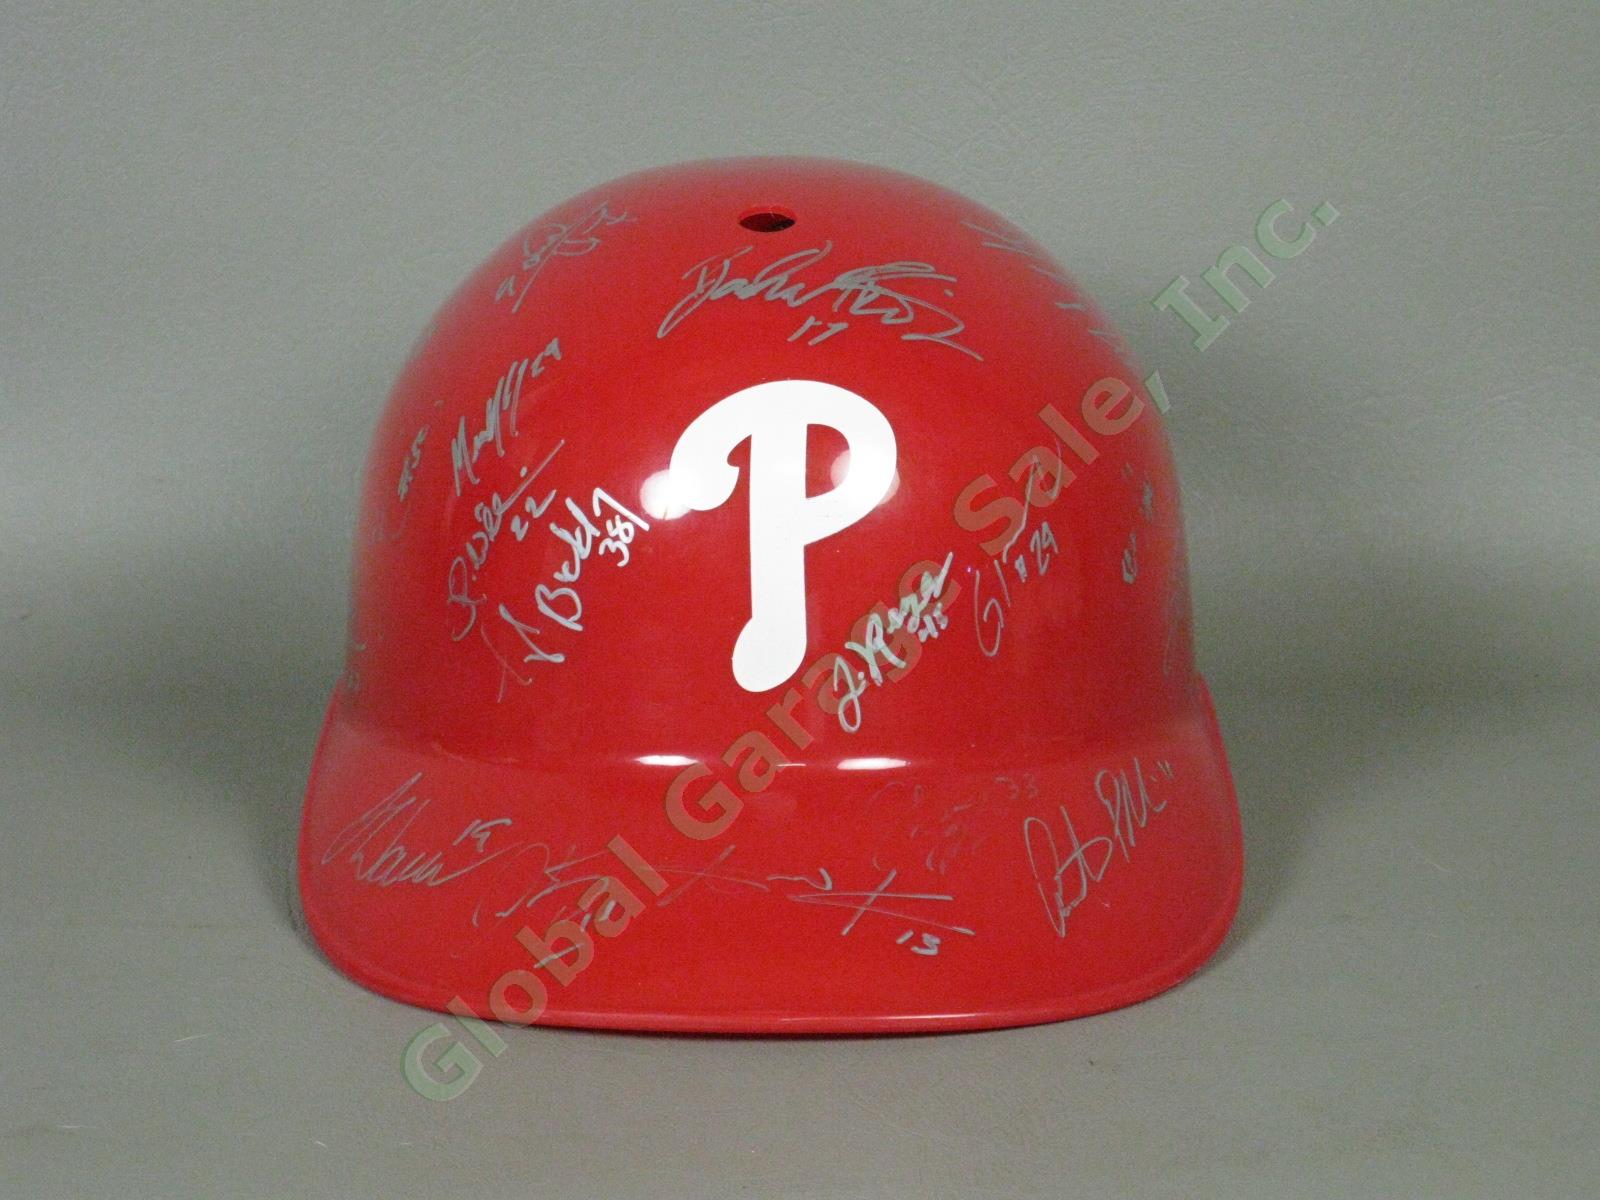 2013 Williamsport Crosscutters Team Signed Baseball Helmet Philadelphia Phillies